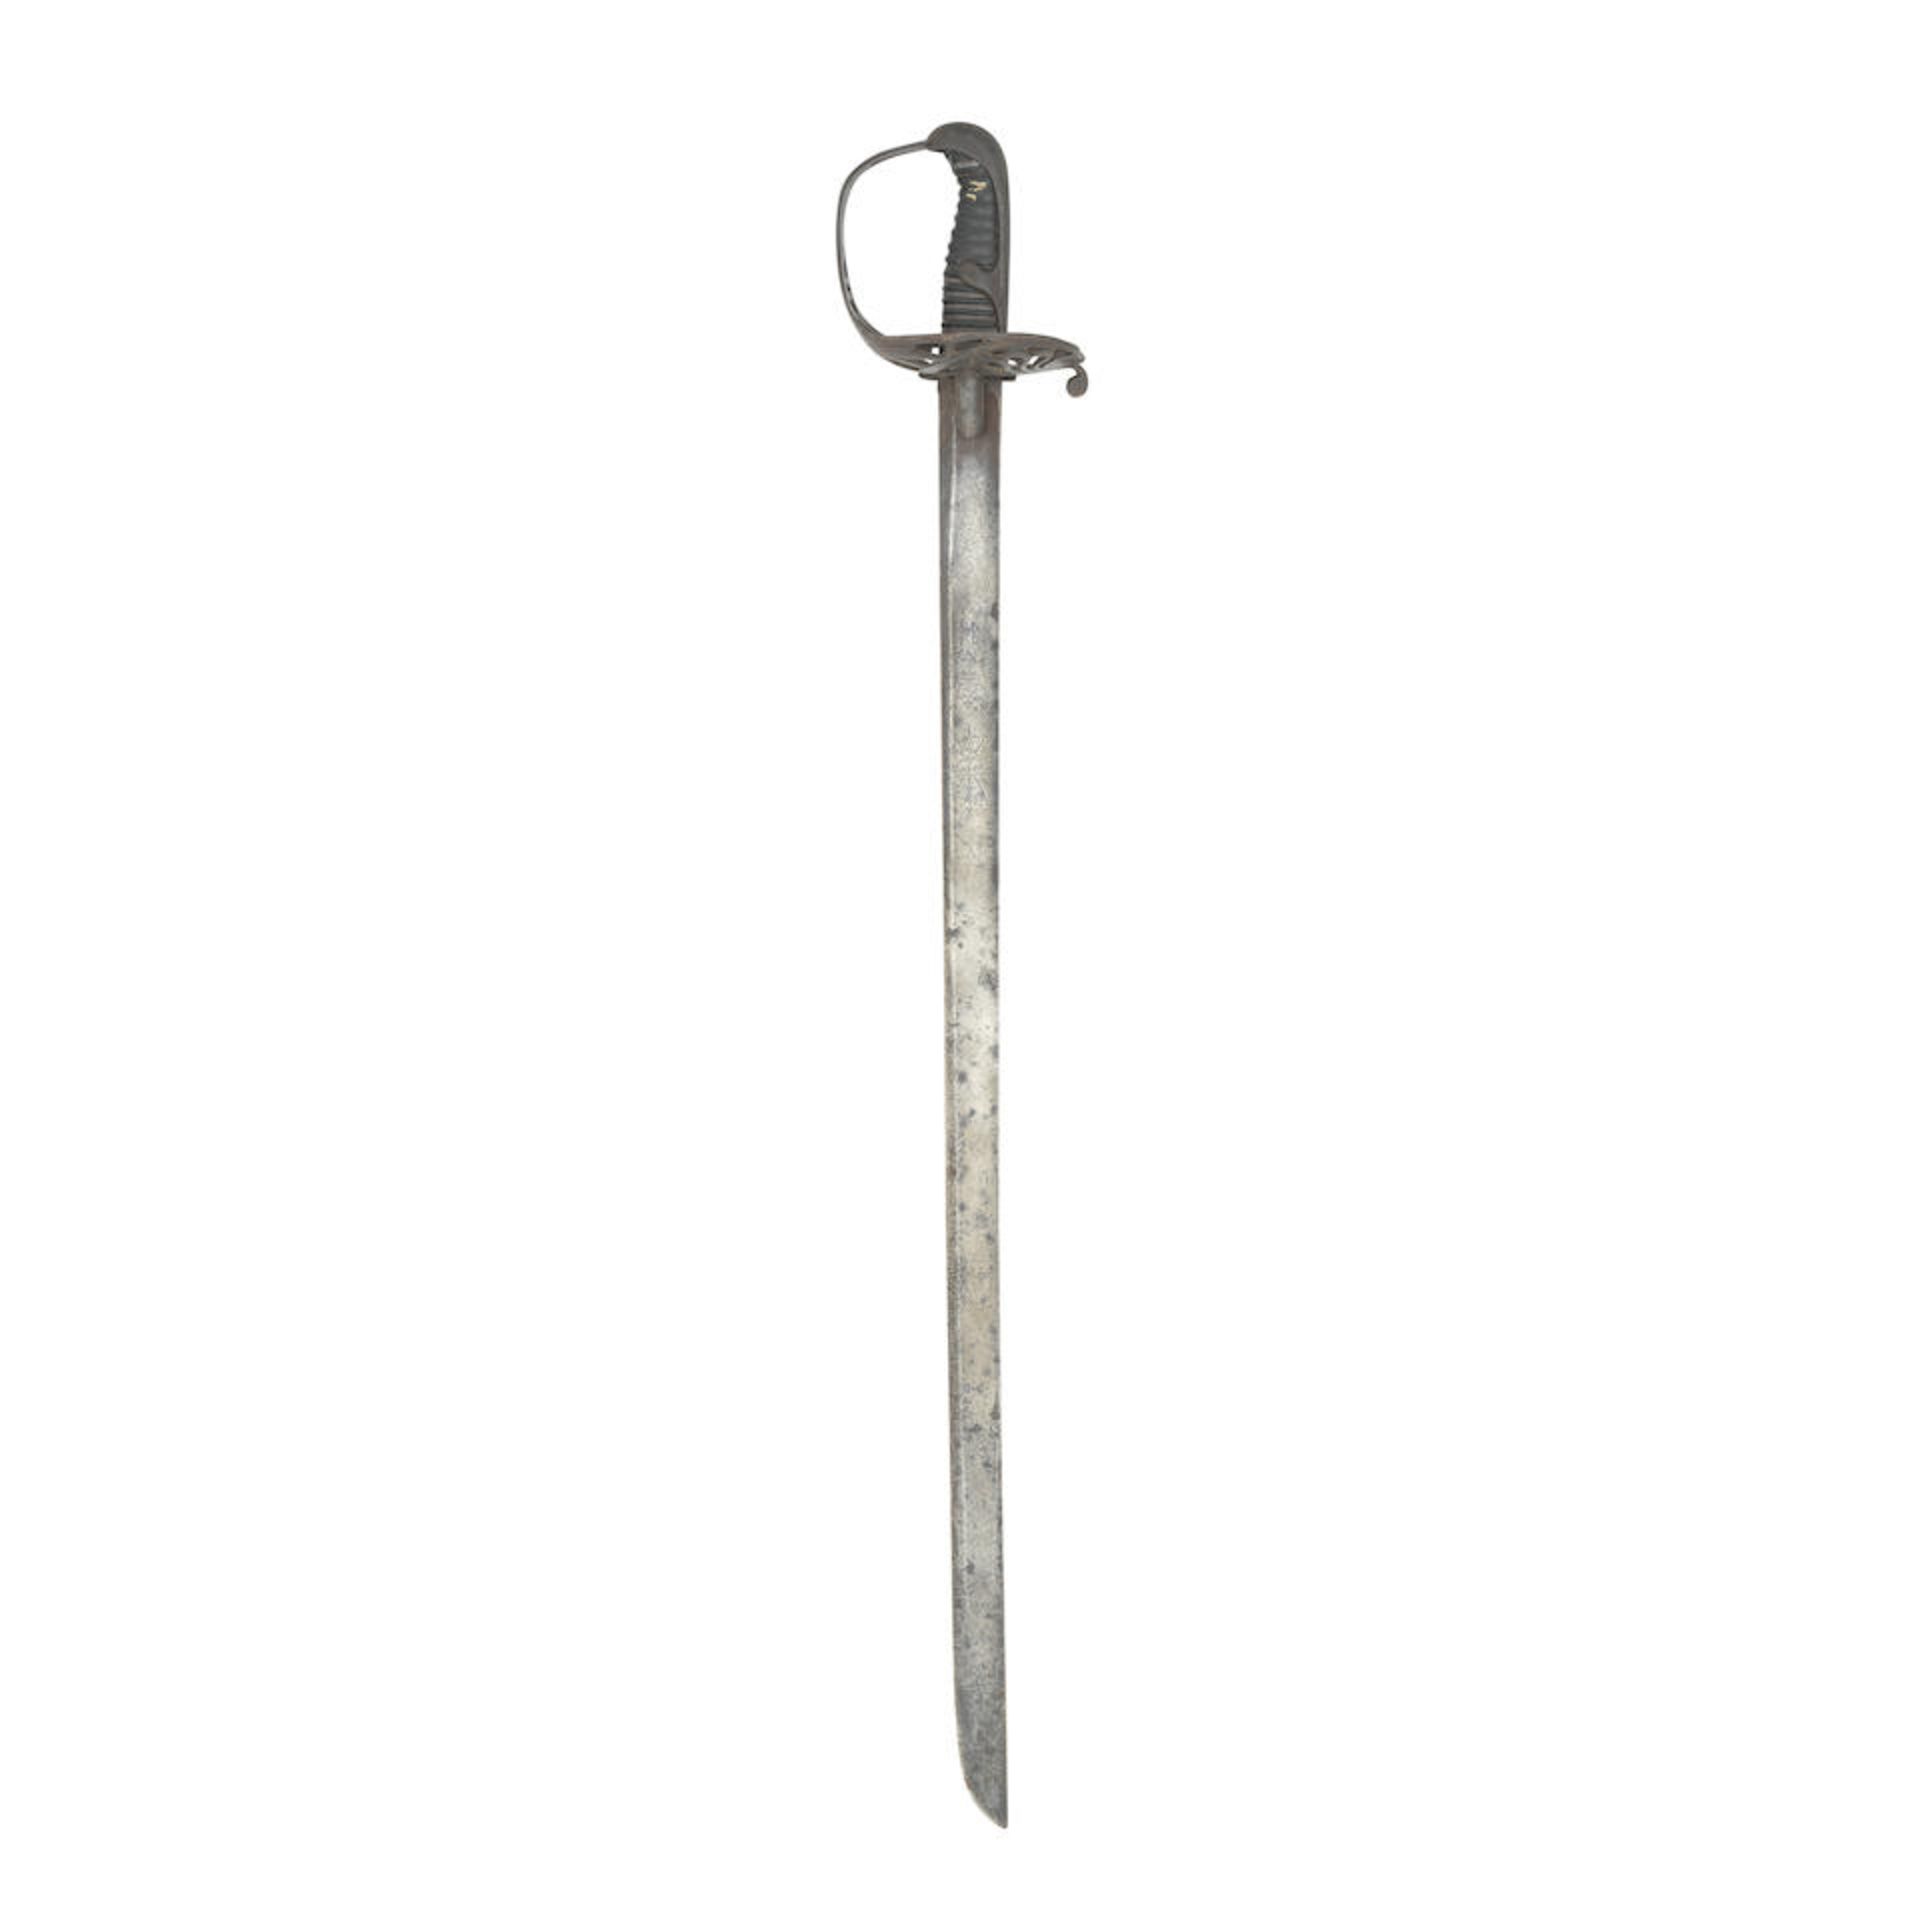 A 1796 Pattern Heavy Cavalry Officer's Undress Sword